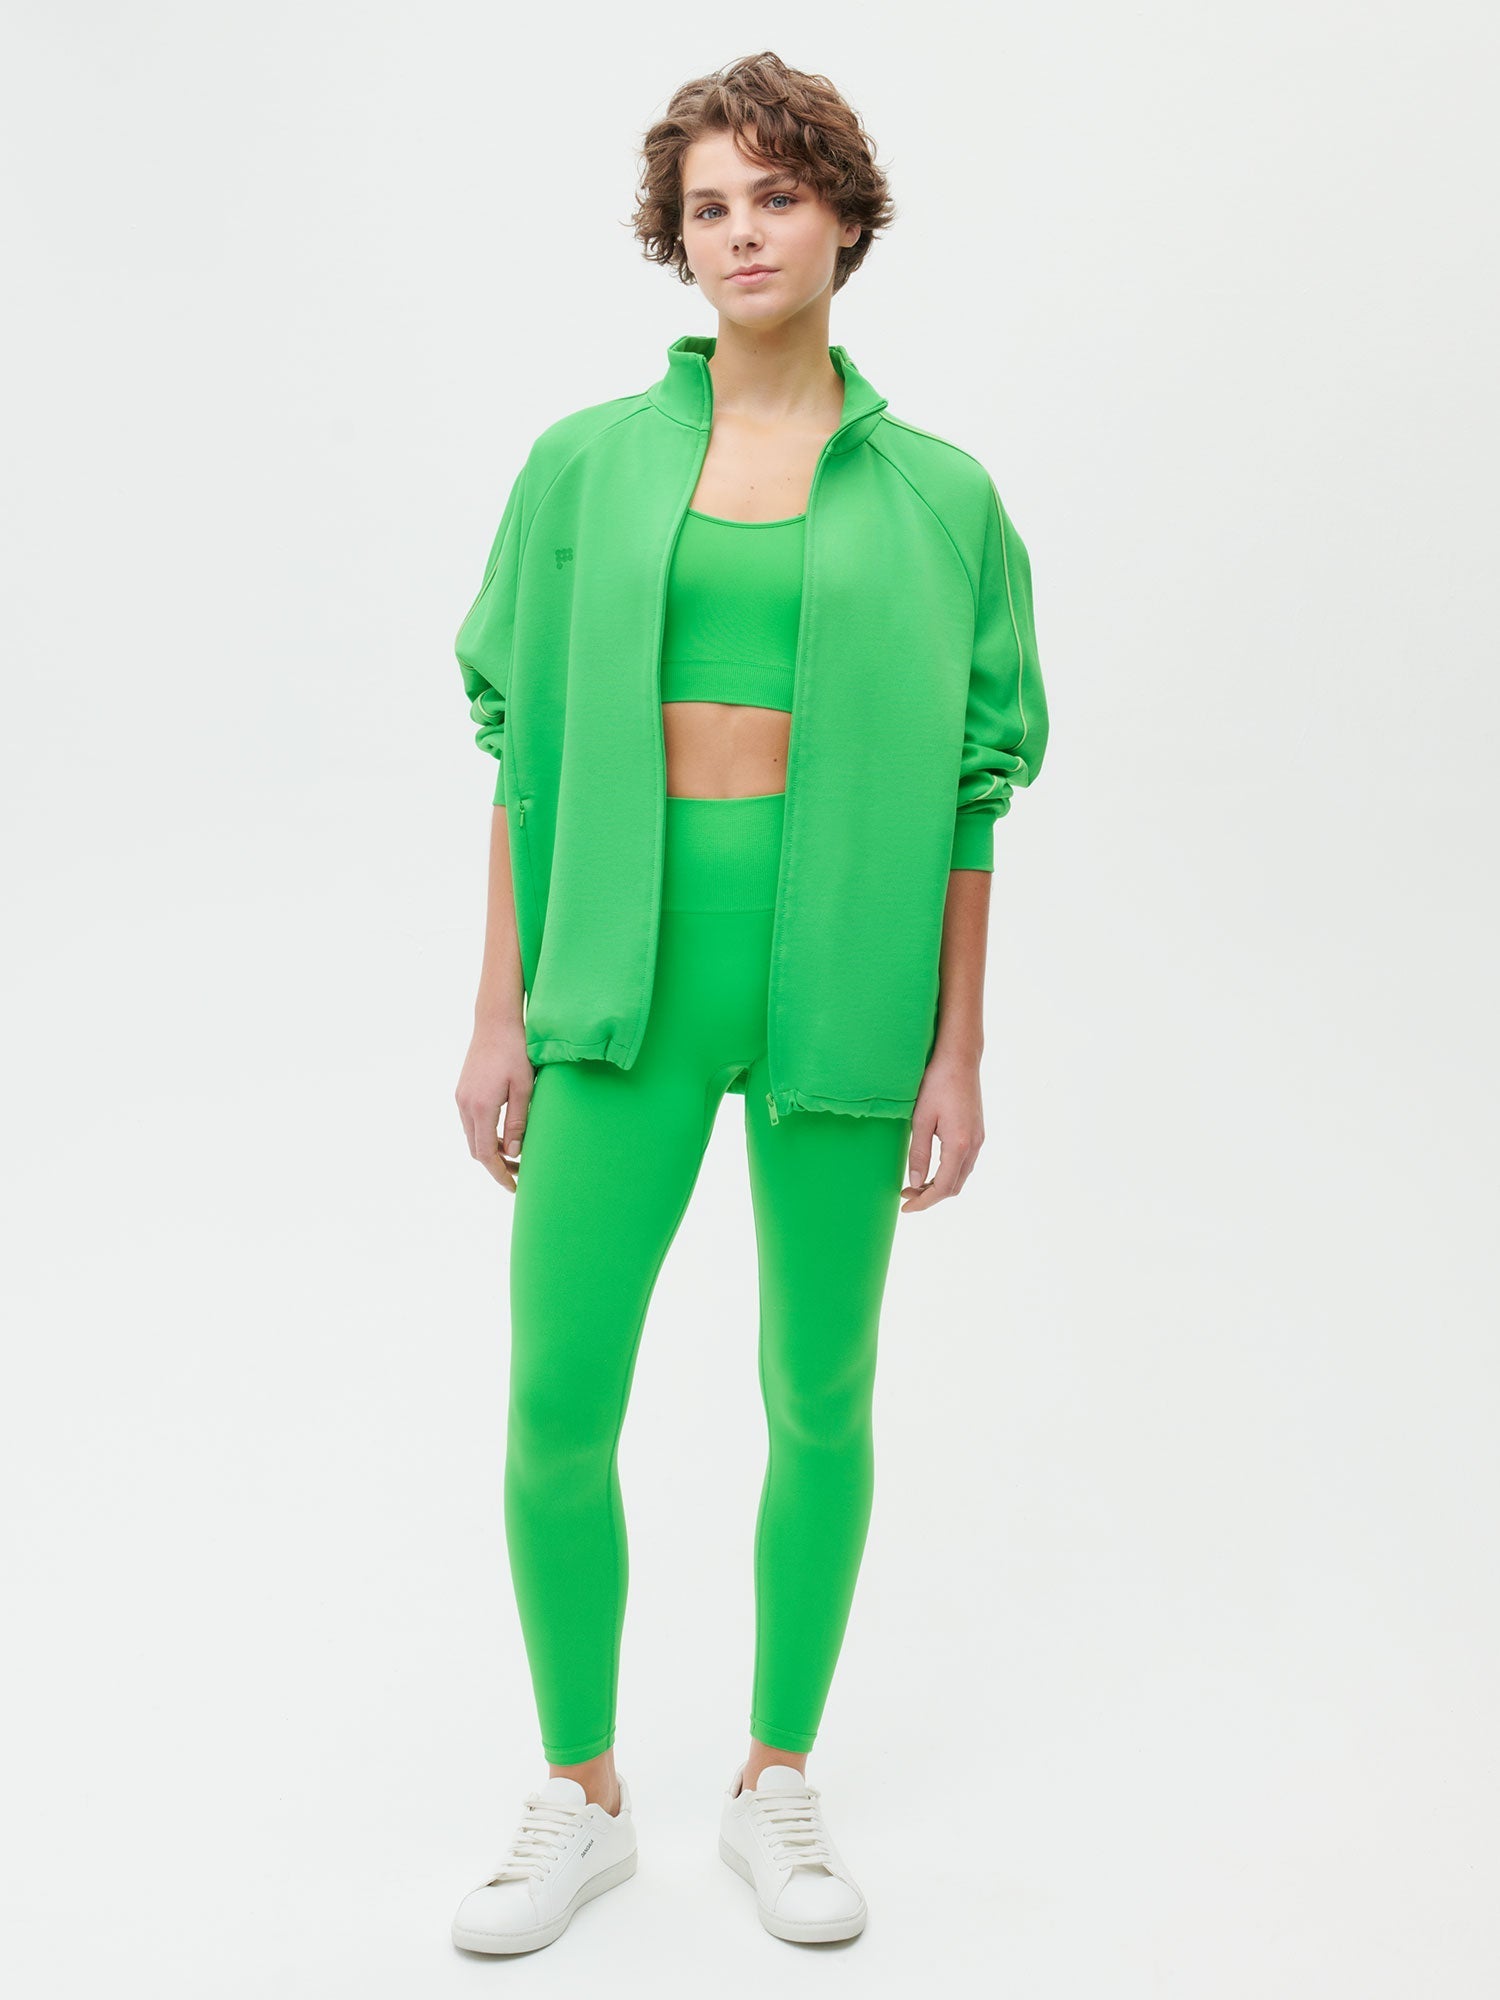 https://cdn.shopify.com/s/files/1/0035/1309/0115/products/Activewear-Womens-Leggings-Jade-Green-Female-4.jpg?v=1662476201